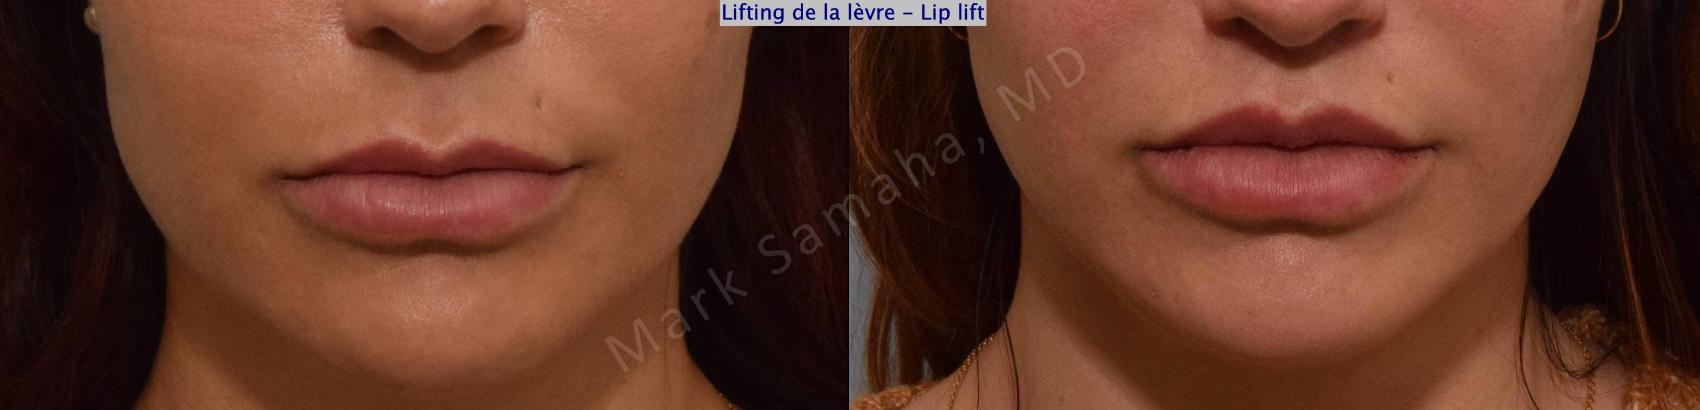 Before & After Lifting de la lèvre supérieure / Lip Lift  Case 171 Front View in Montreal, QC